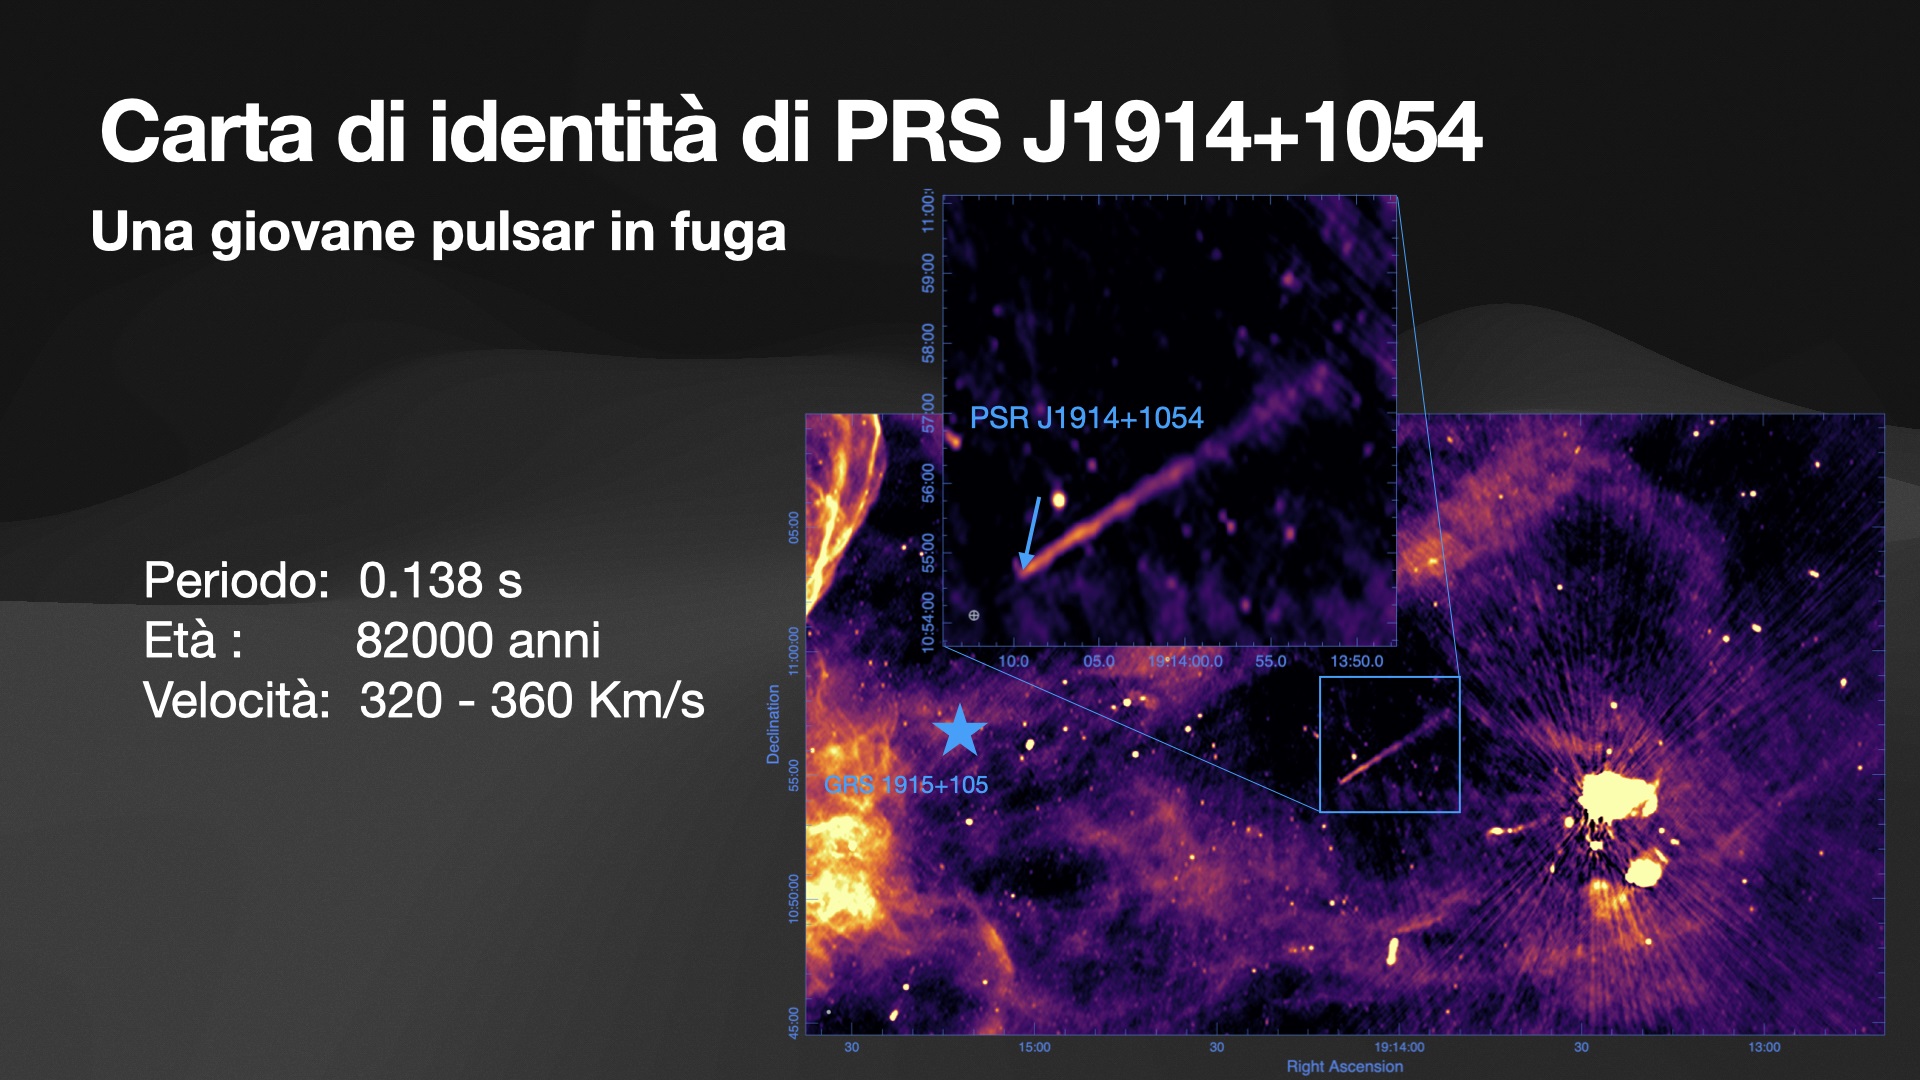 Figura 3 - Carta d'identita` della pulsar PSRJ1914+1054. Crediti Sara Elisa Motta.